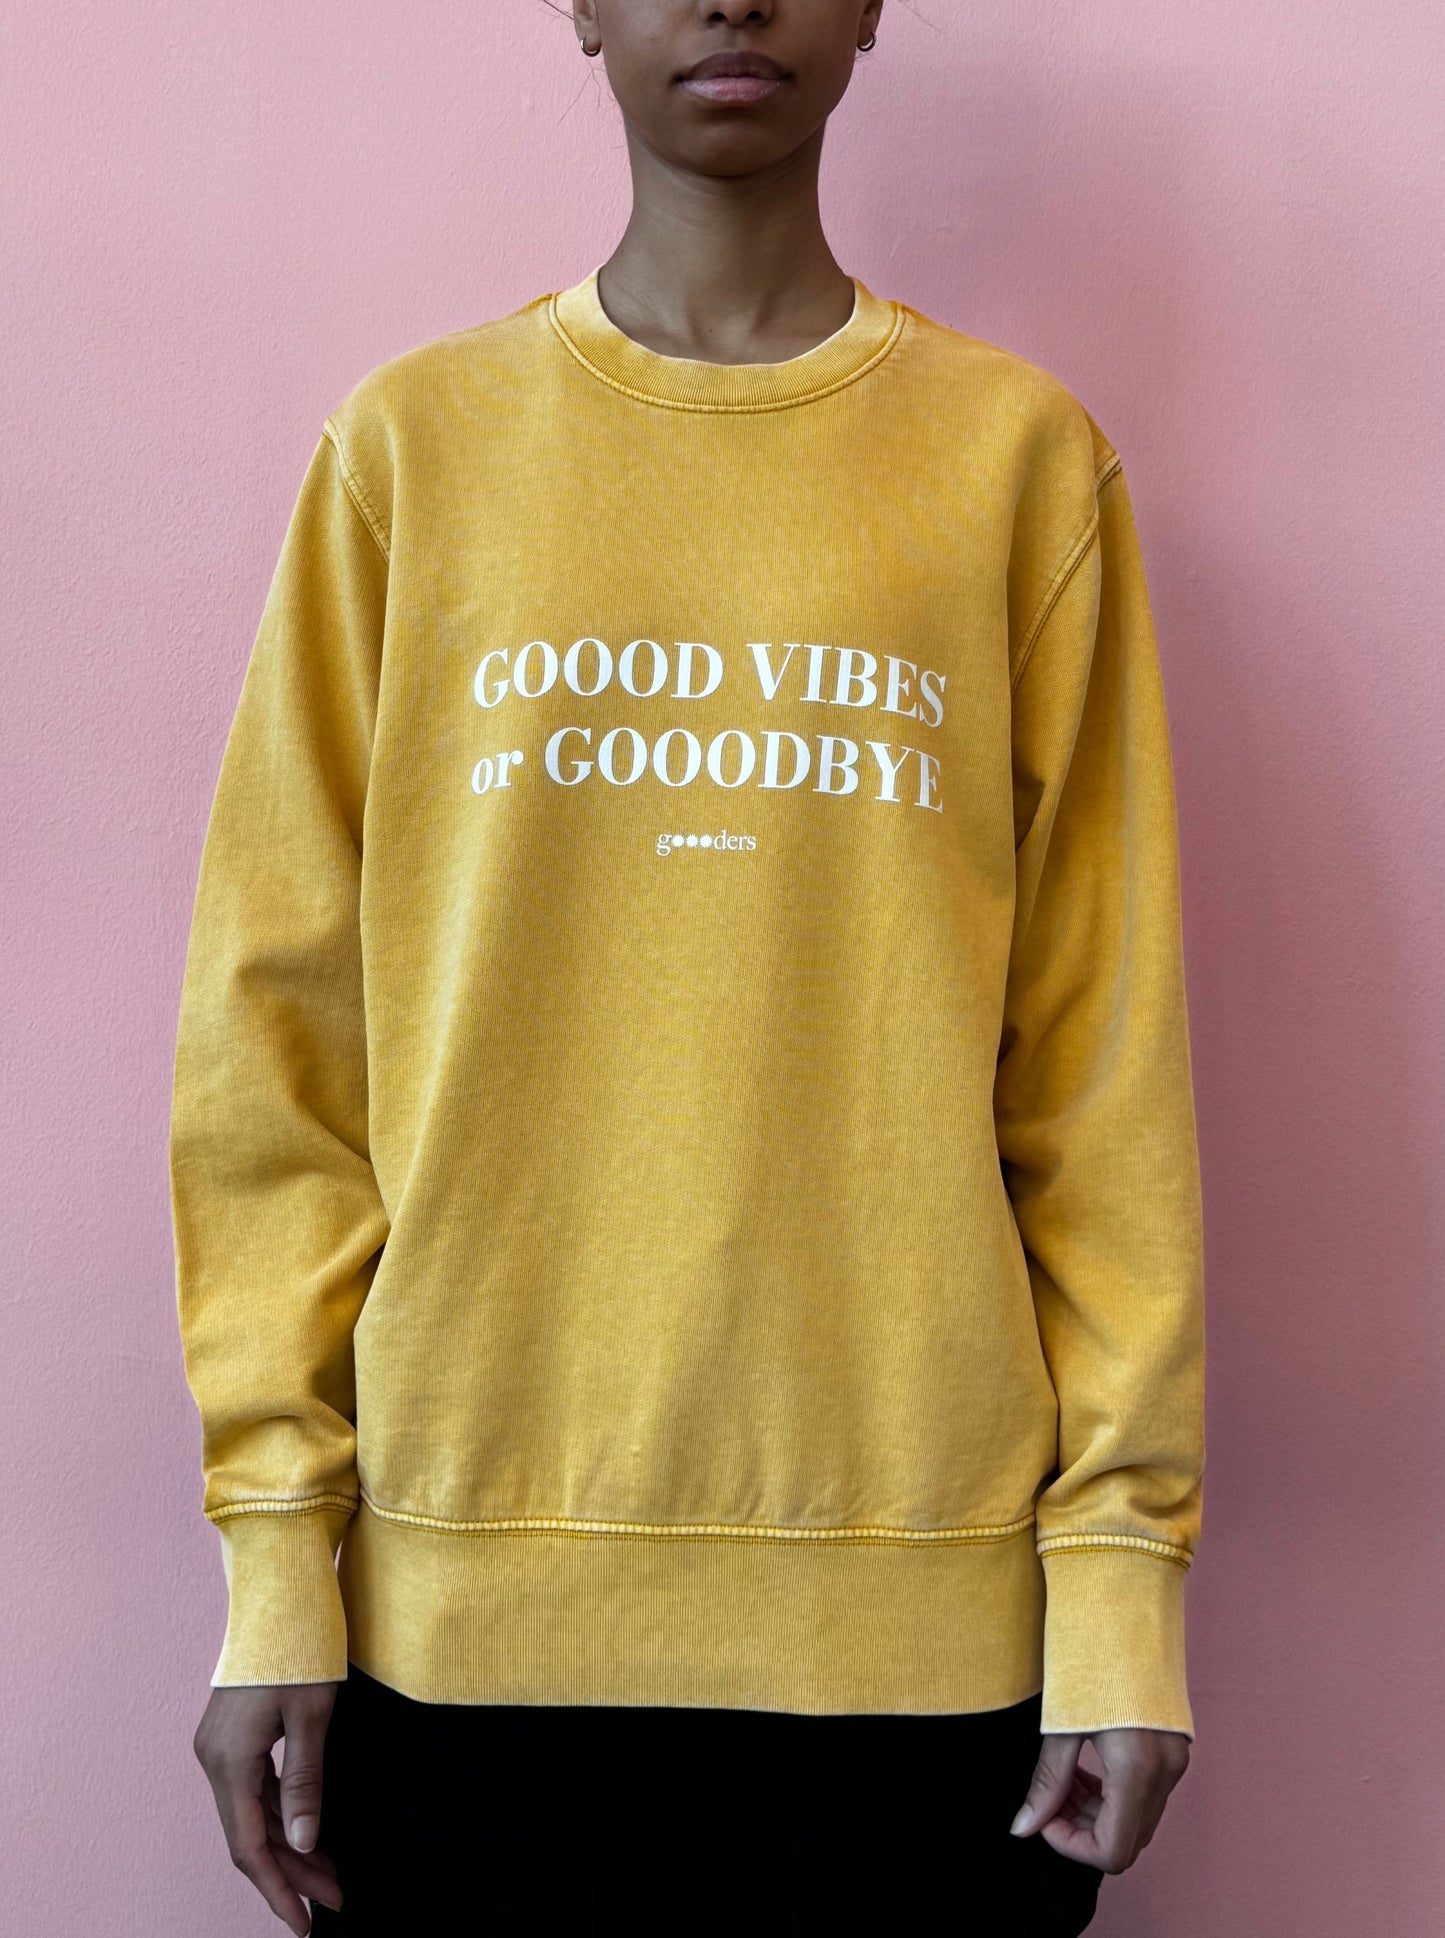 Goood Vibes Or Gooodbye Crewneck Sweatshirt - Gold Ocre